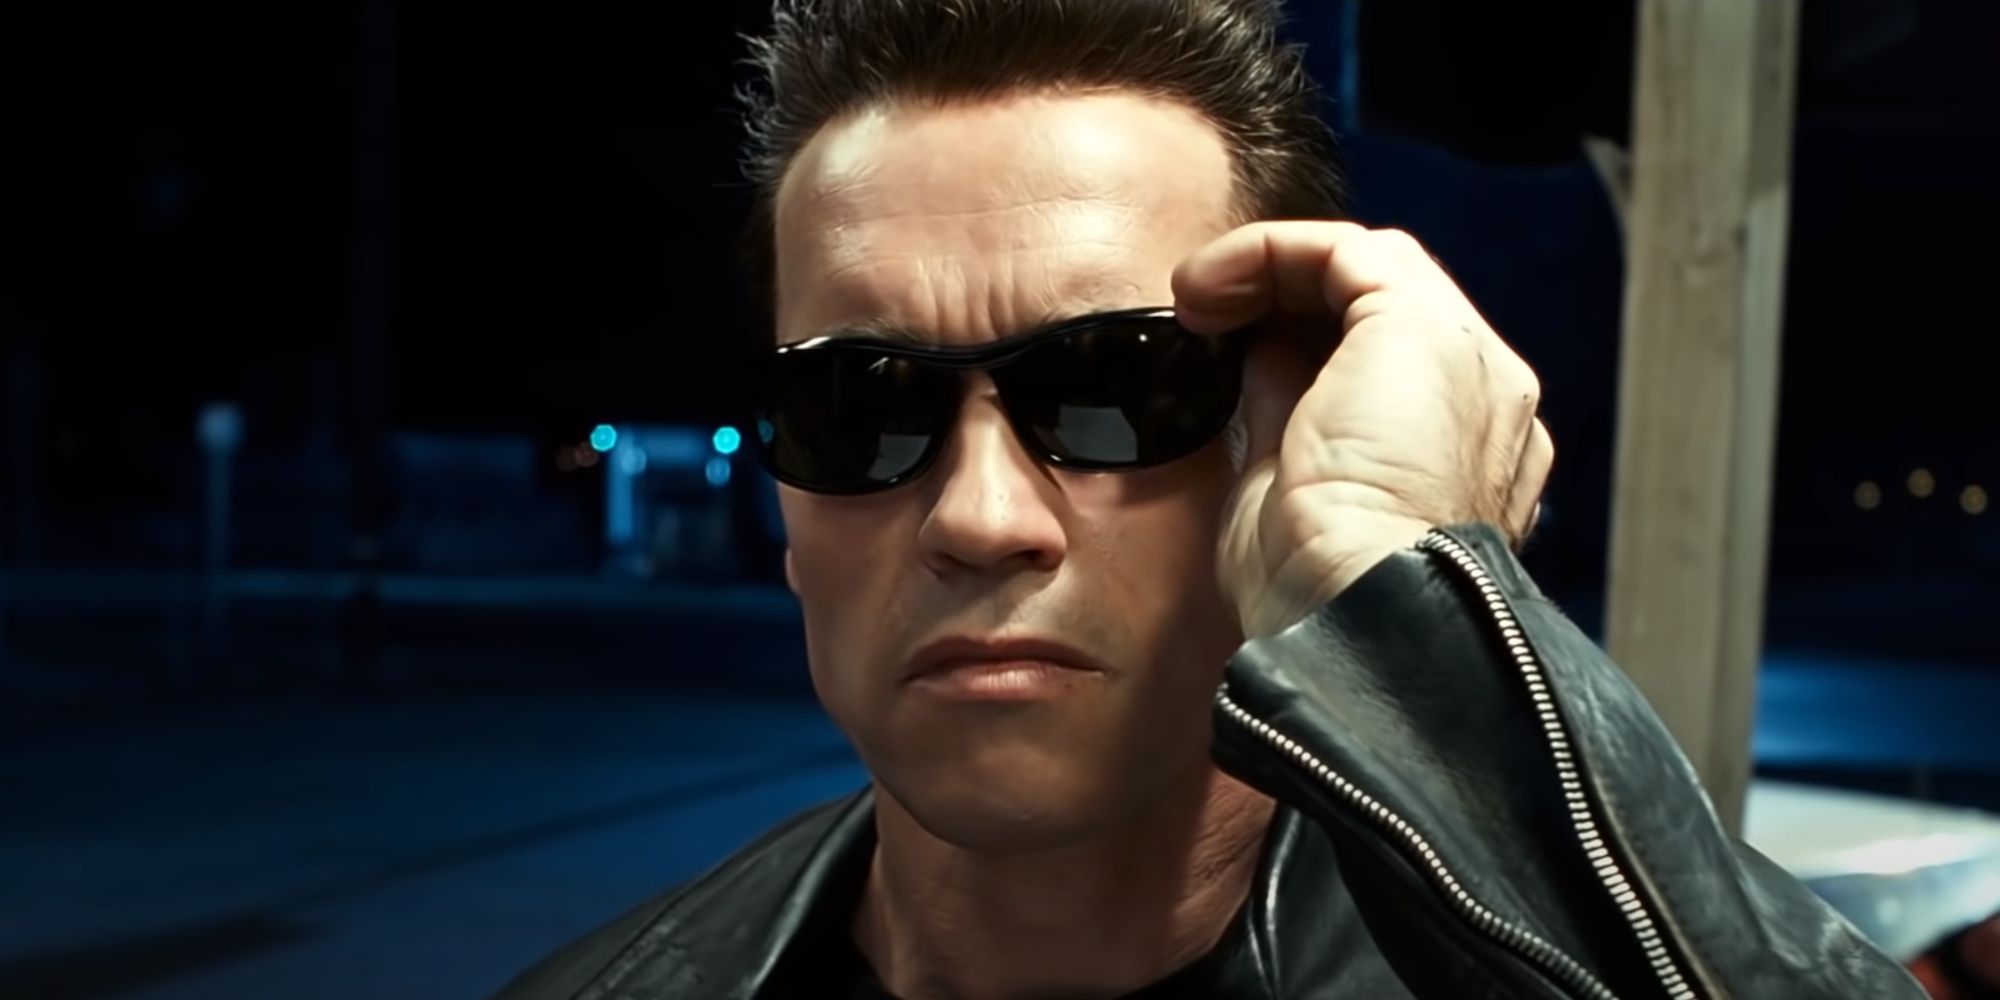 the Terminator adjusts his sunglasses